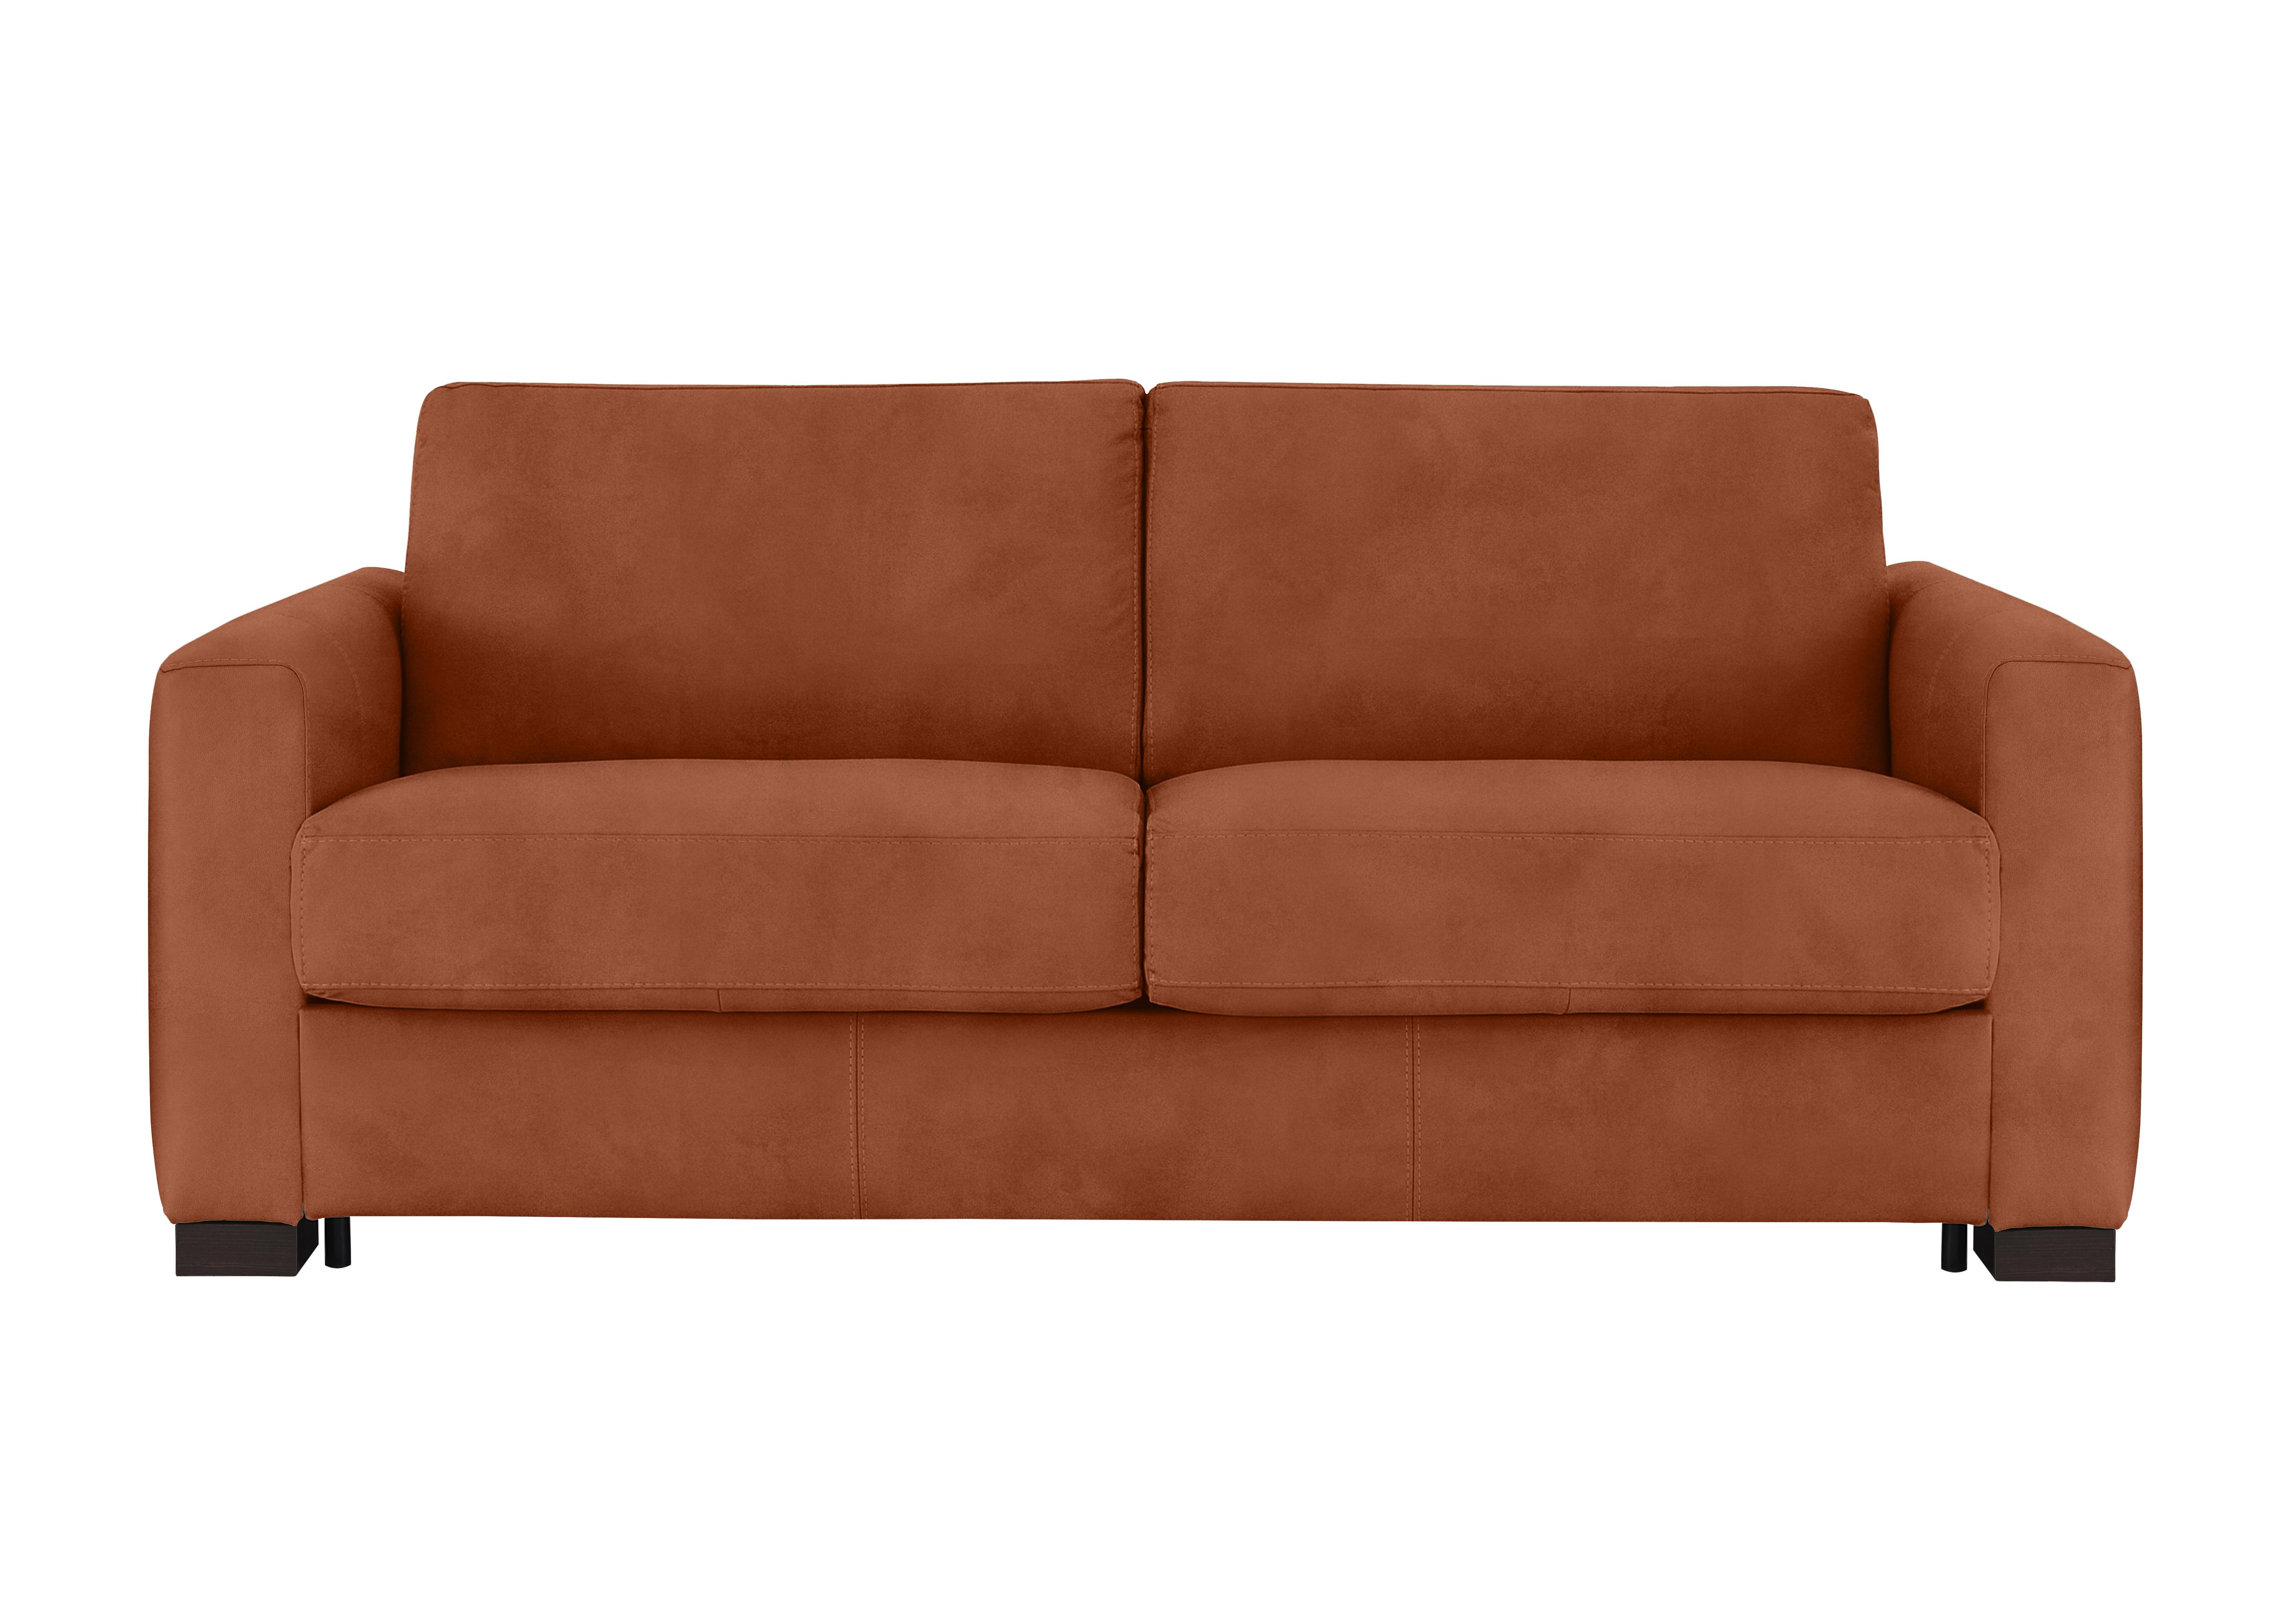 Alcova 3 Seater Fabric Sofa Bed with Box Arms in Selma Mattone on Furniture Village